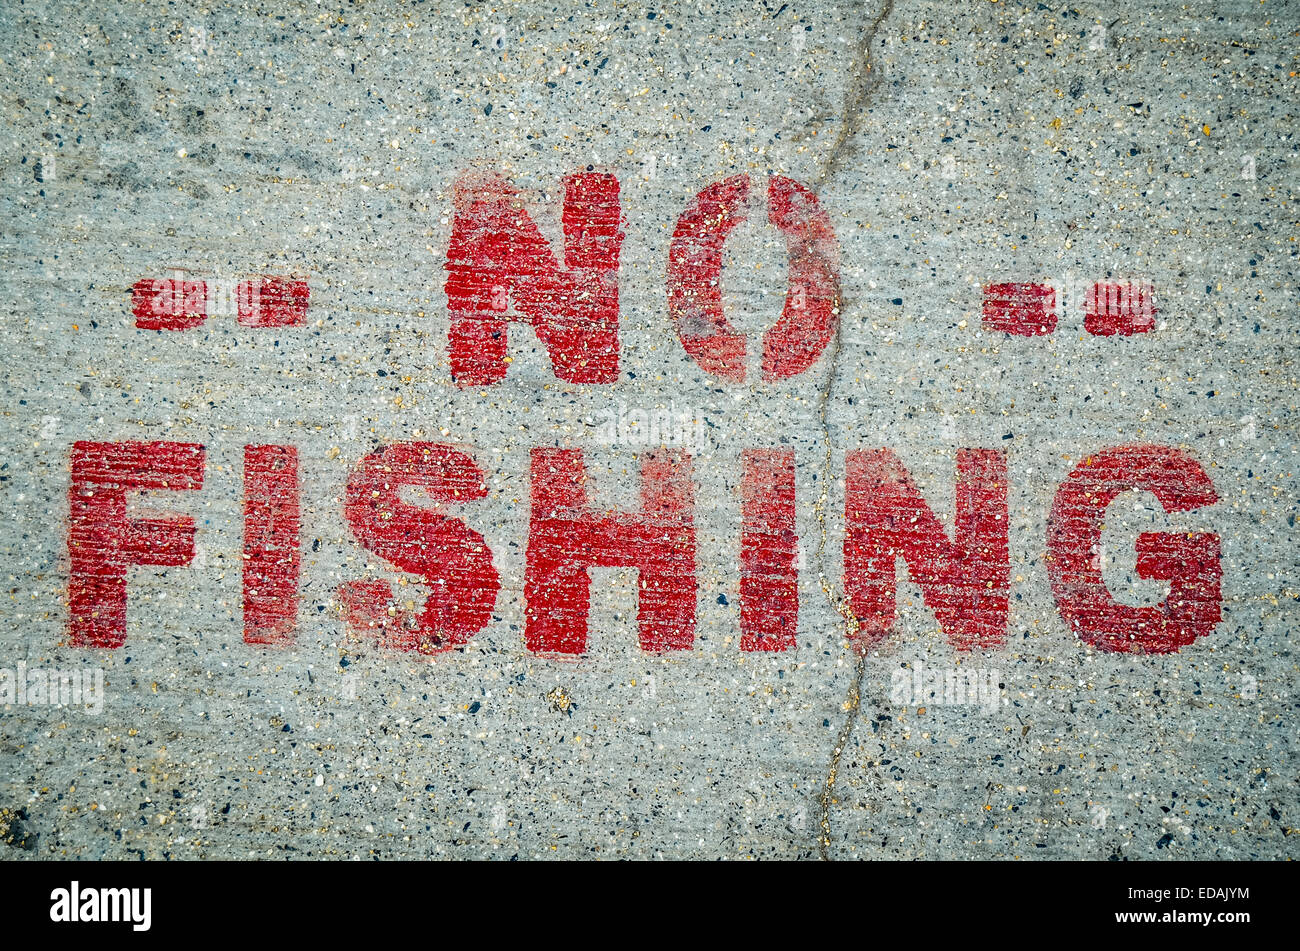 No Fishing Sign Stock Photo